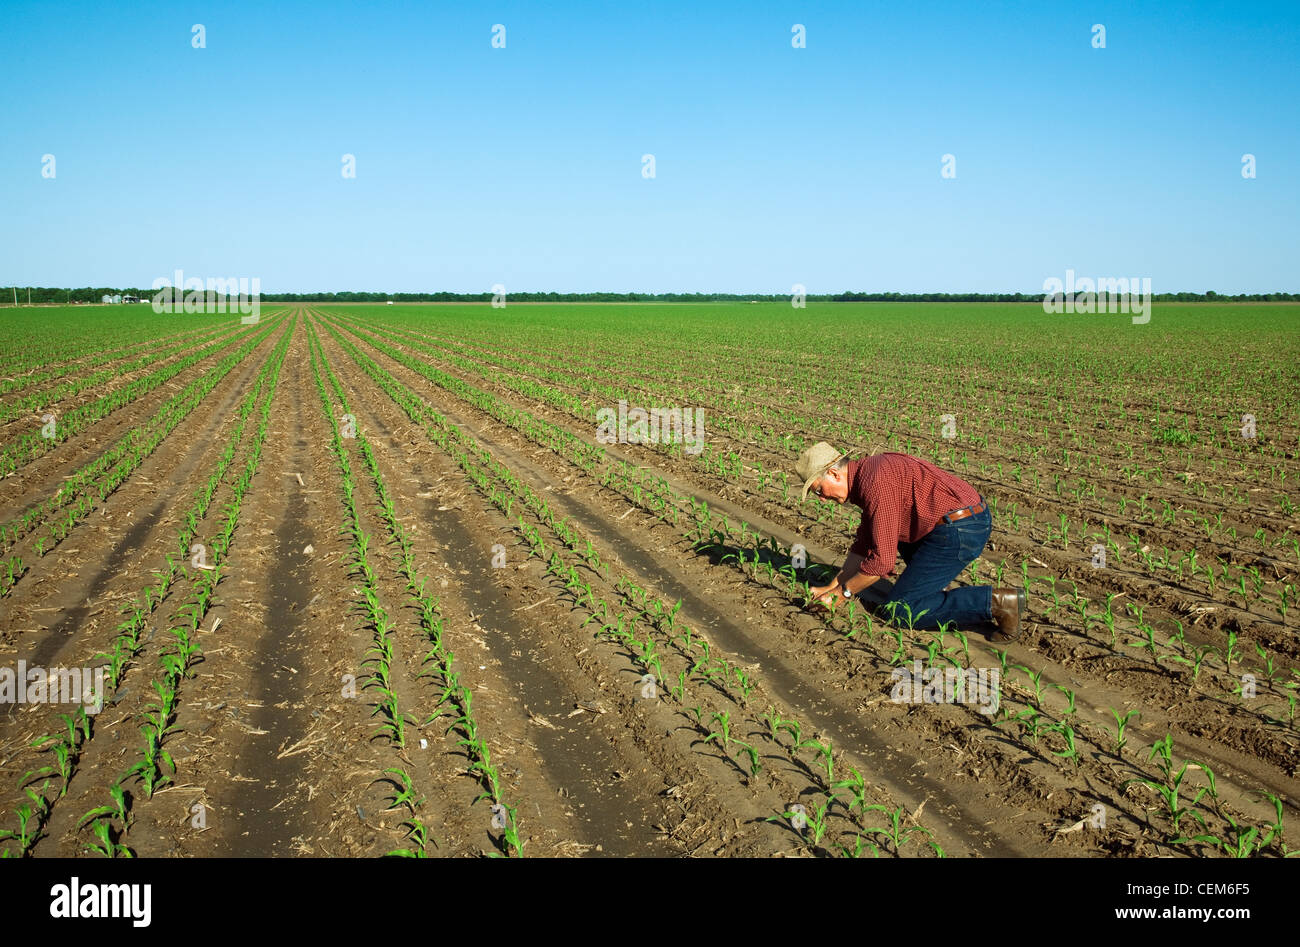 Agriculture - A farmer (grower) examines early growth grain corn plants at the four leaf stage / near England, Arkansas, USA. Stock Photo